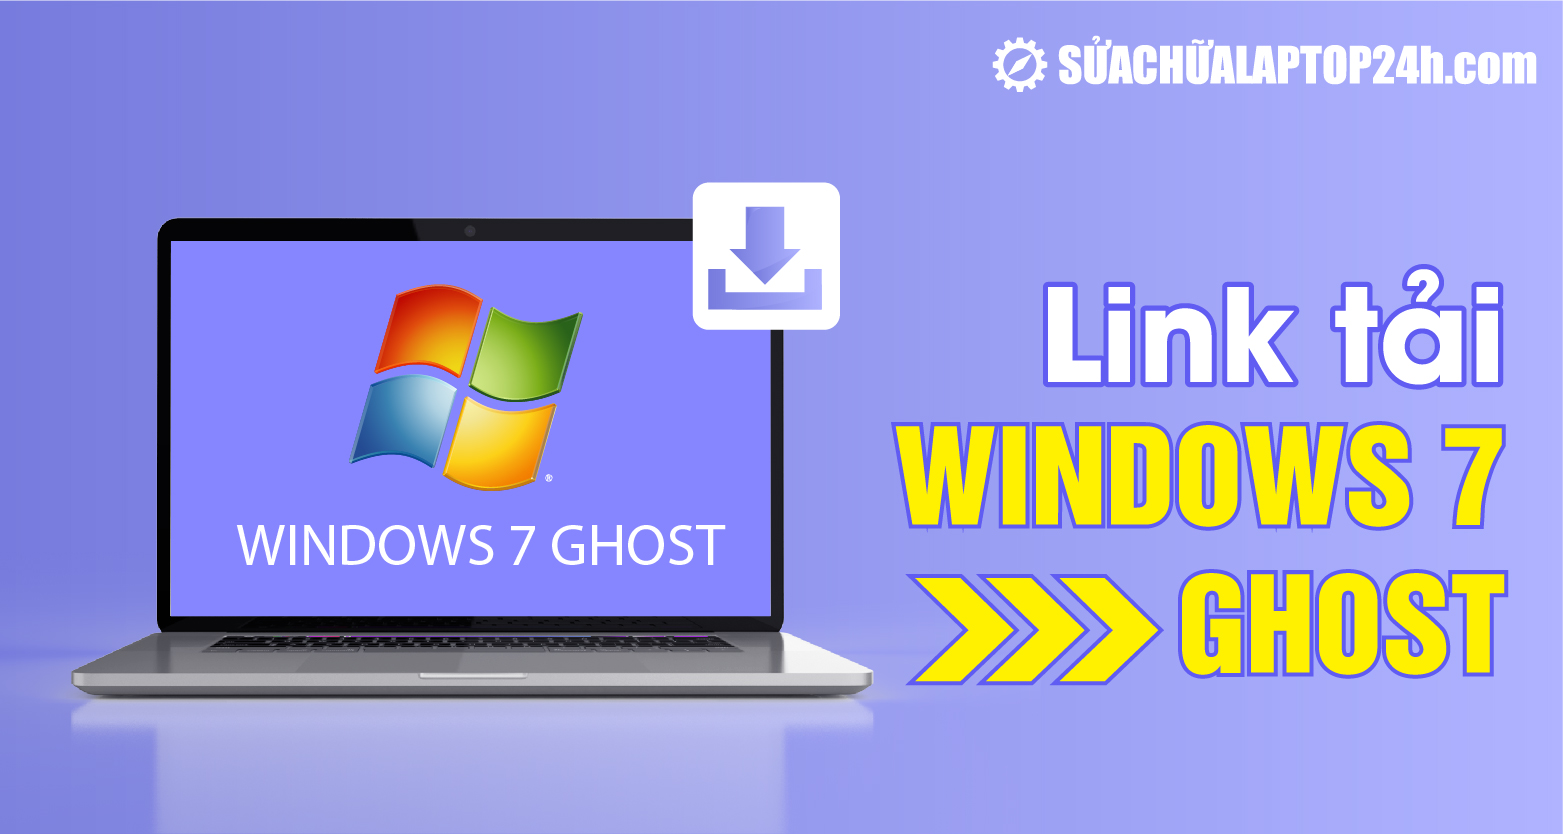 Cập nhật link tải Windows 7 Ghost